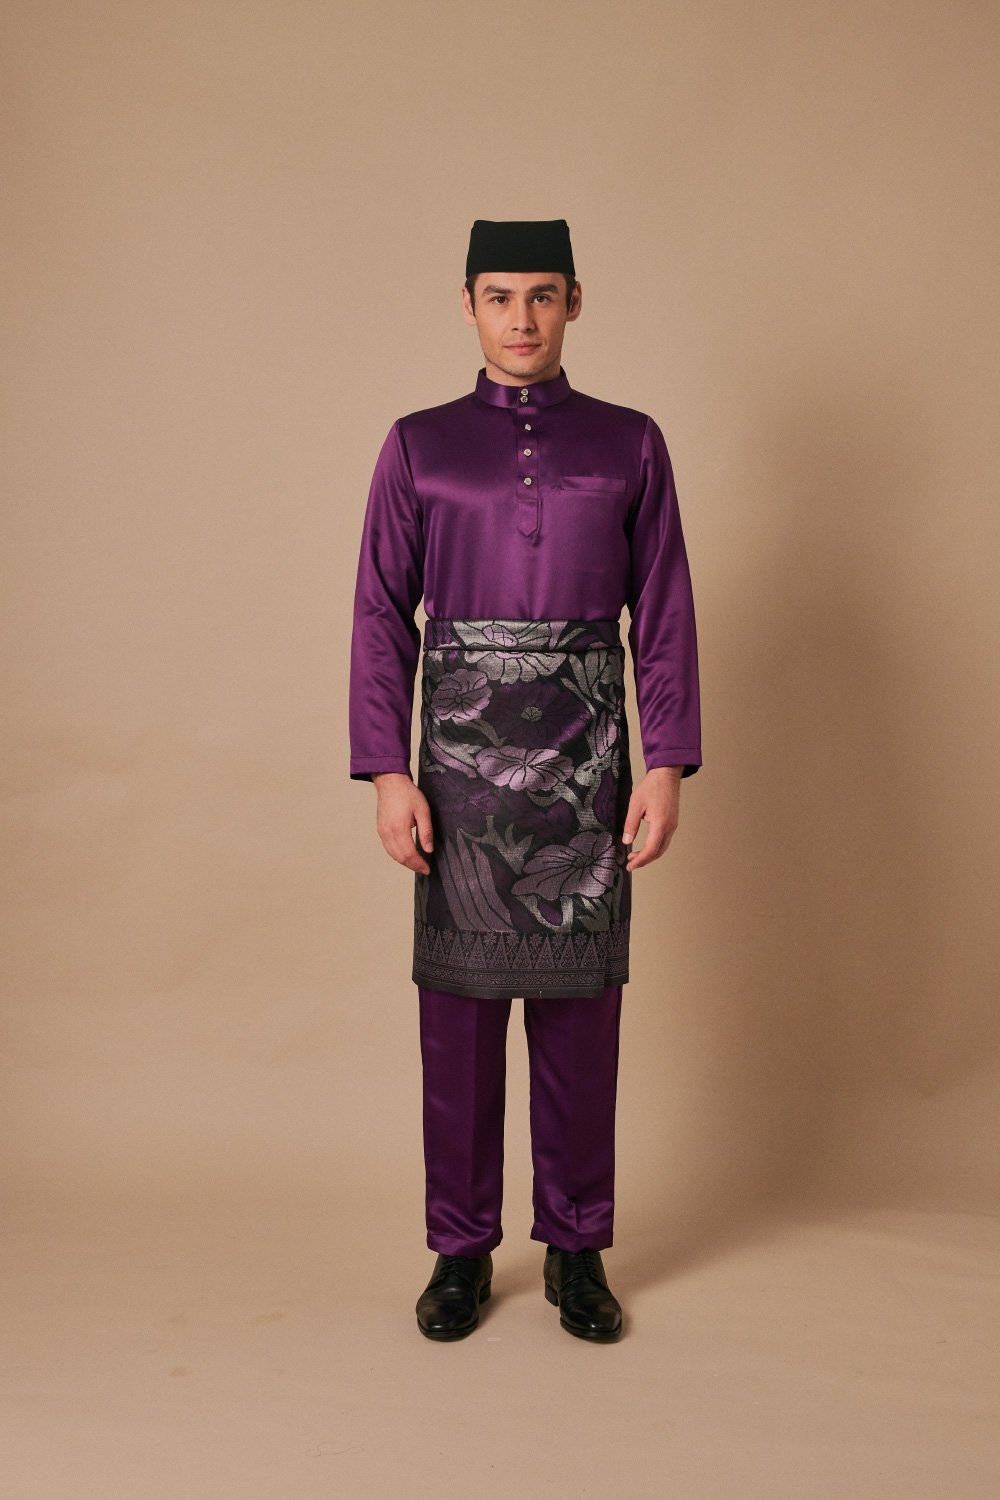 Baju Melayu in Royal Purple